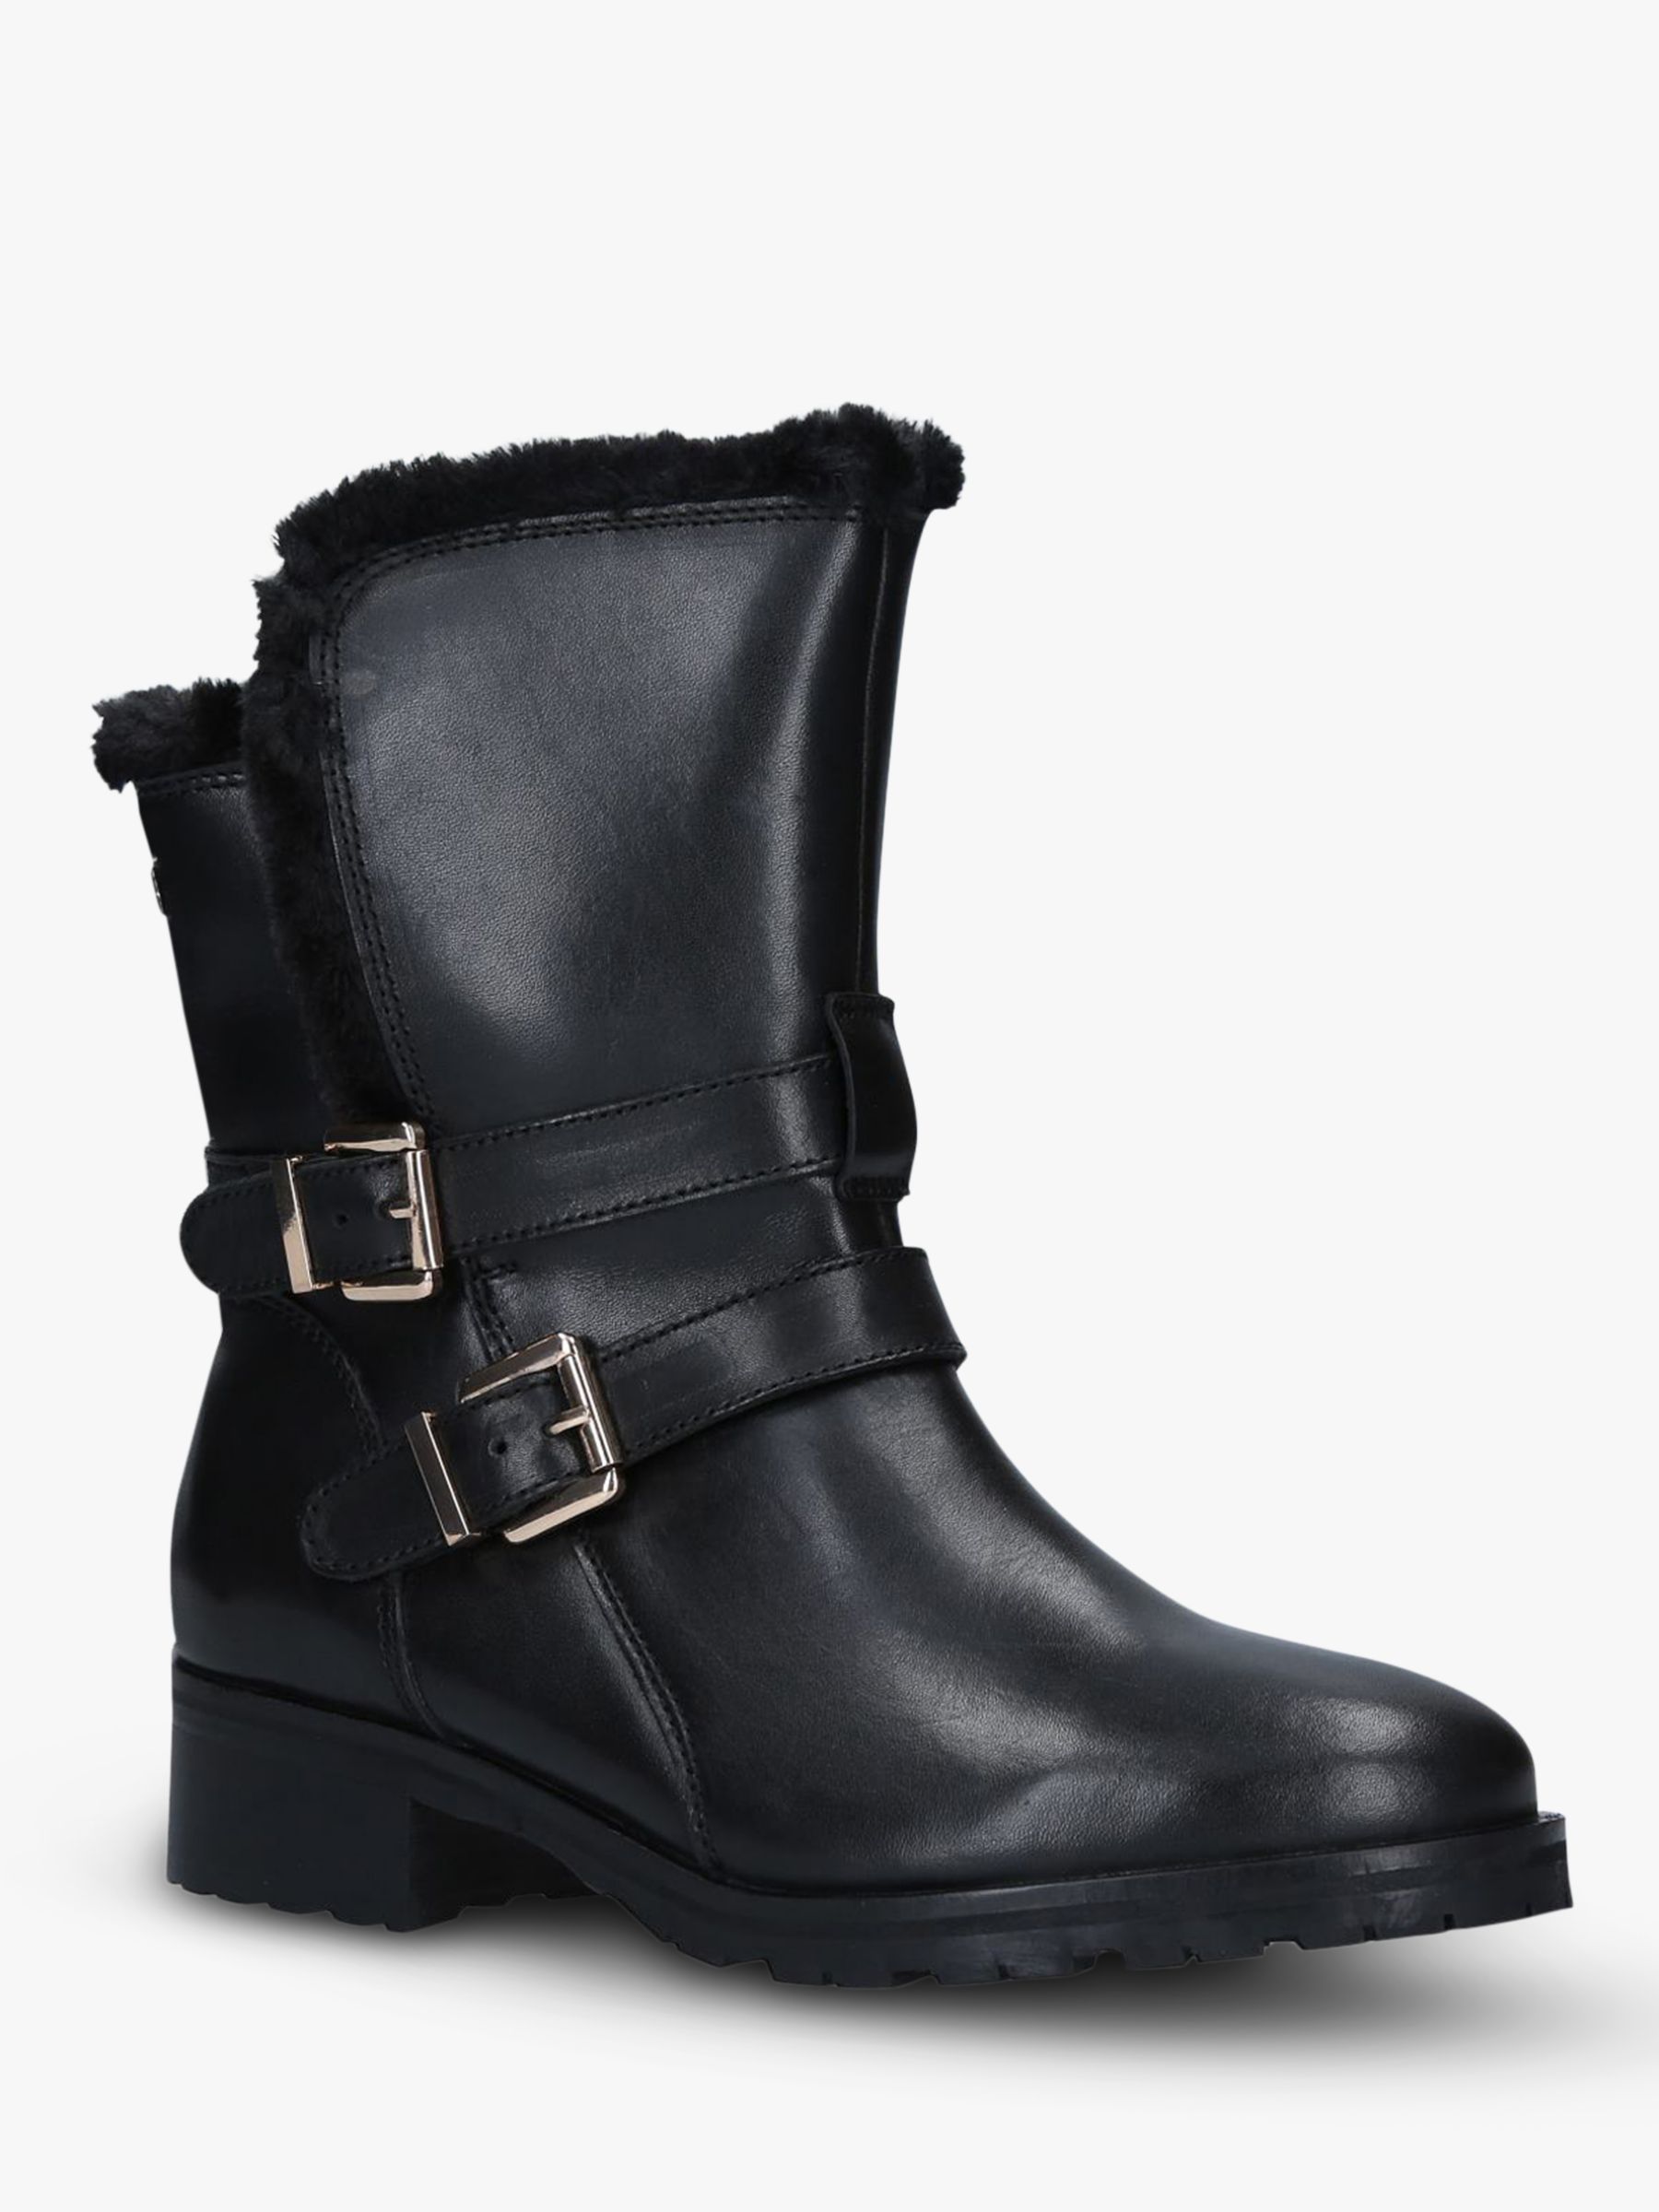 Carvela Comfort Roxi Buckle Detail Leather Ankle Boots, Black at John ...